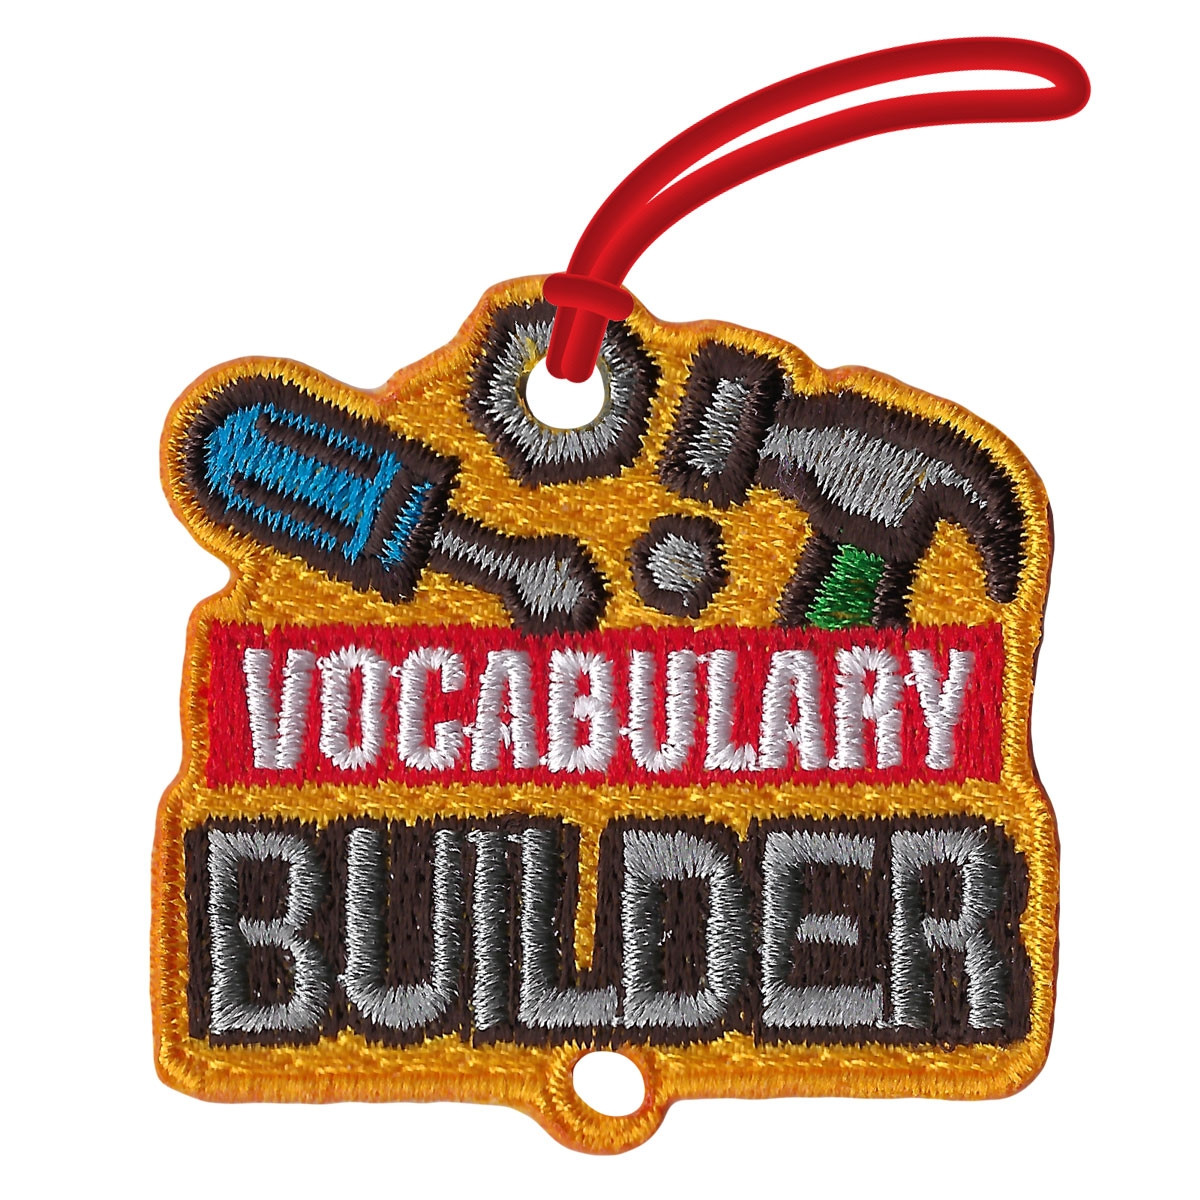 PATCH Tag – Vocabulary Builder